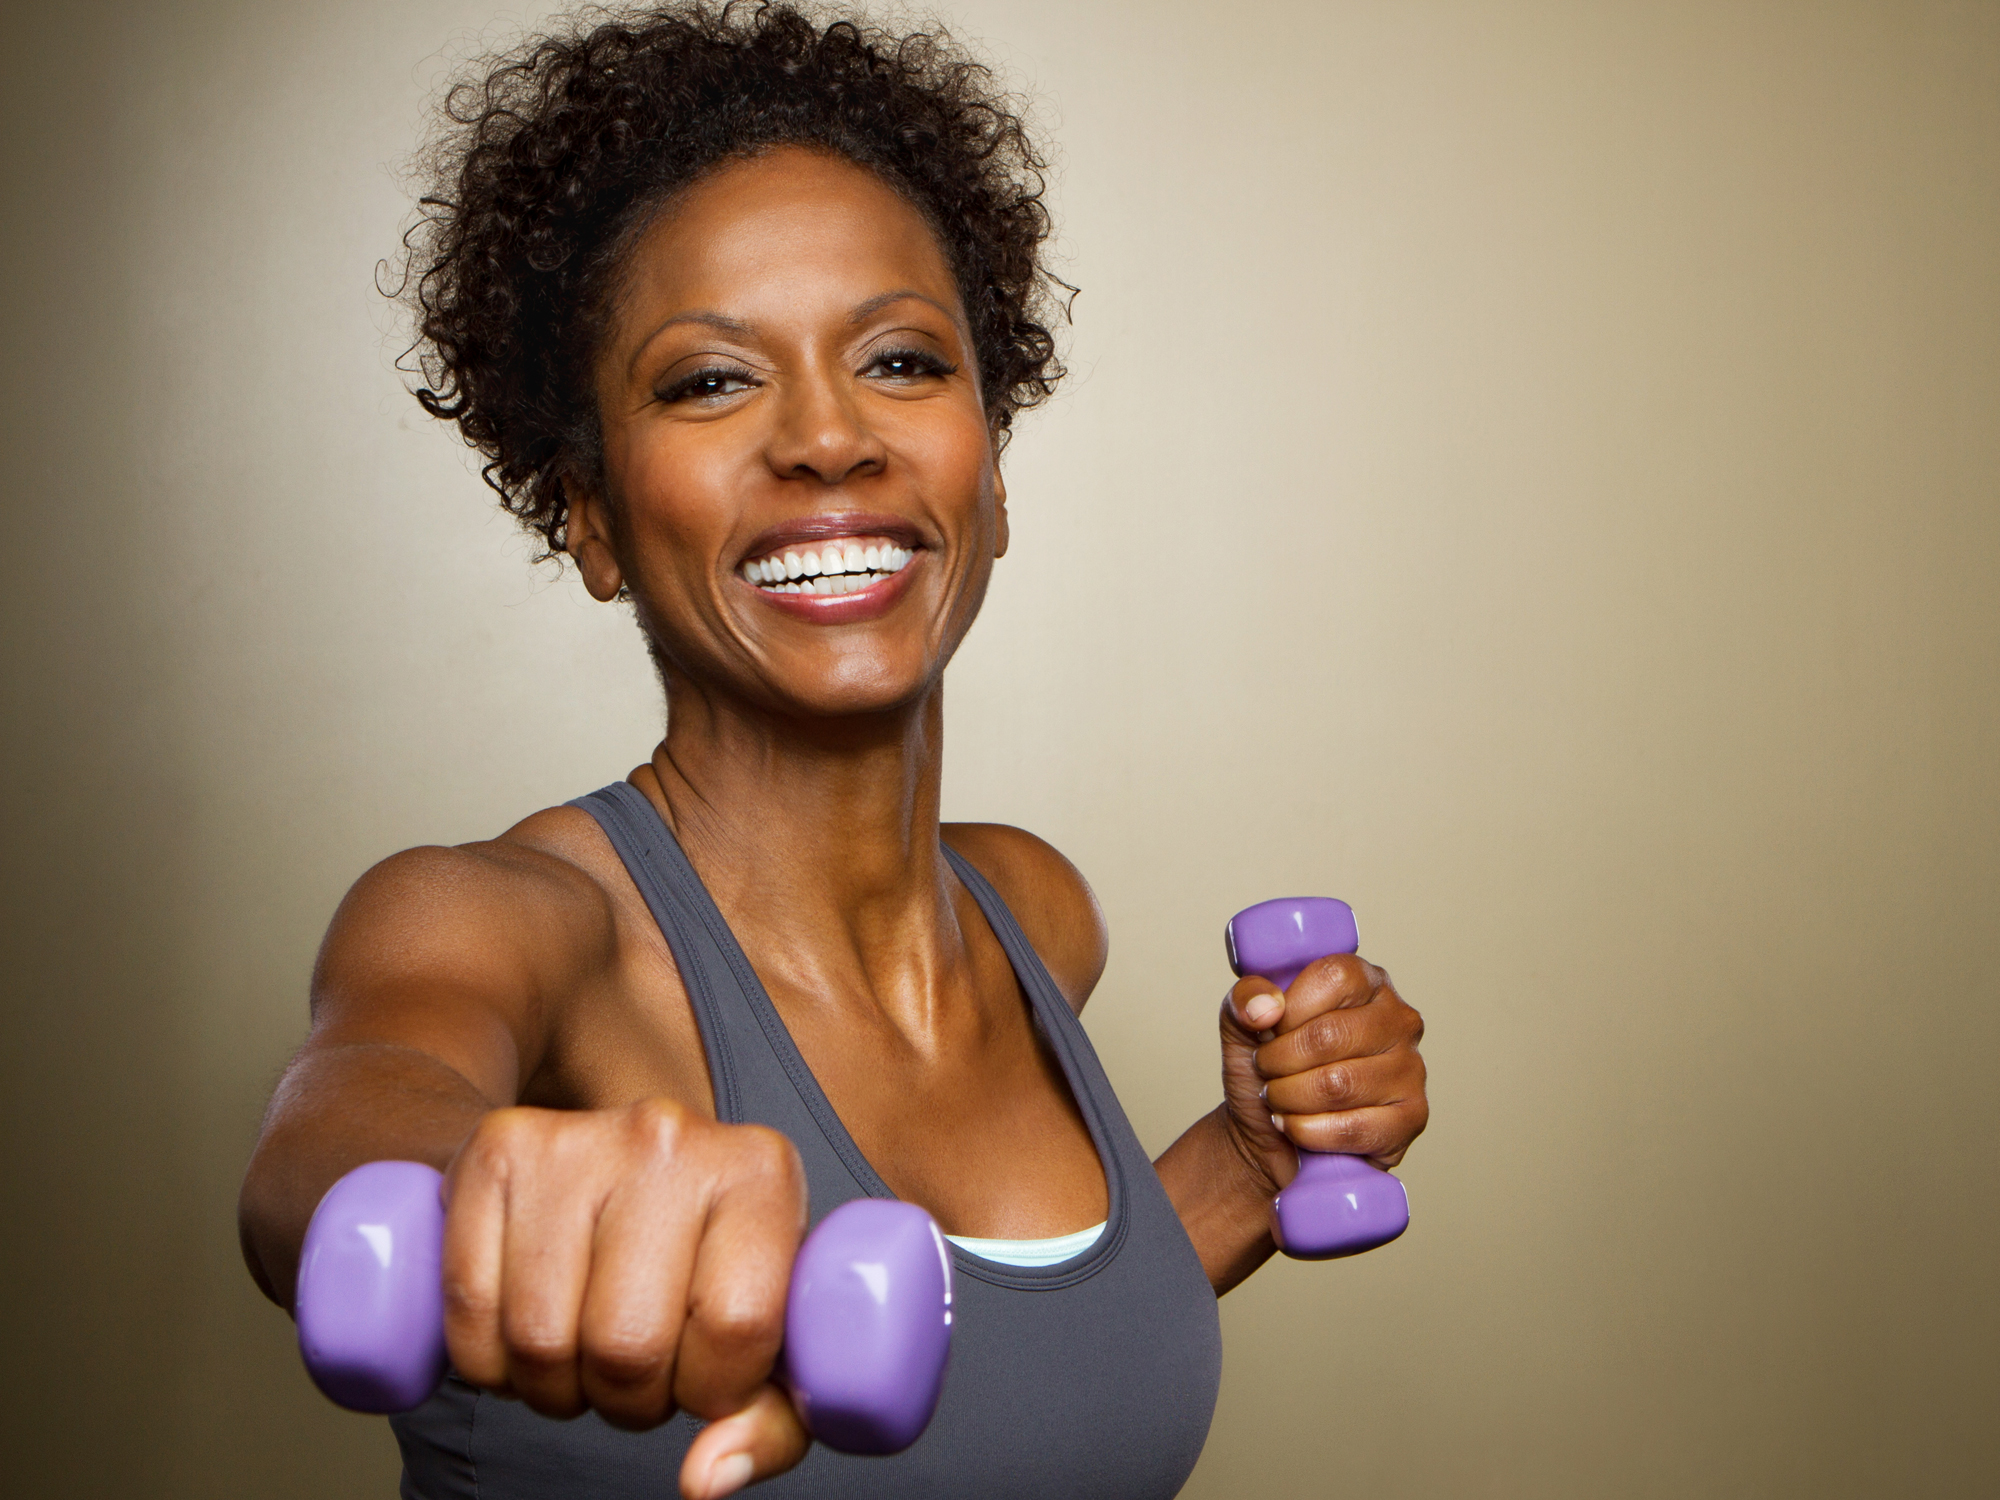 Best exercises for women over 50